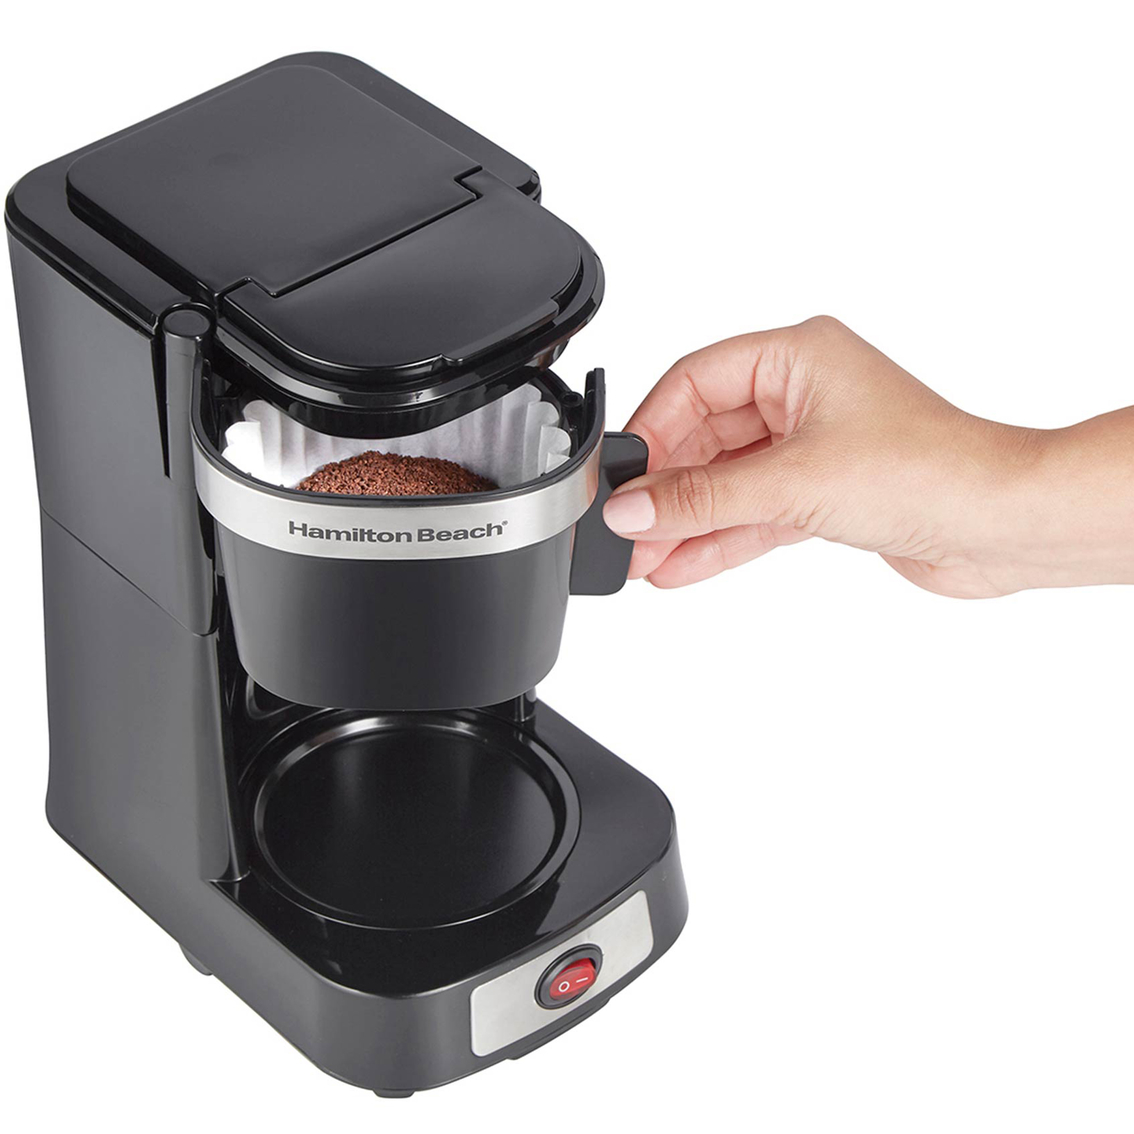  Hamiton Beach 12 Cup Compact Programmable Drip Coffee